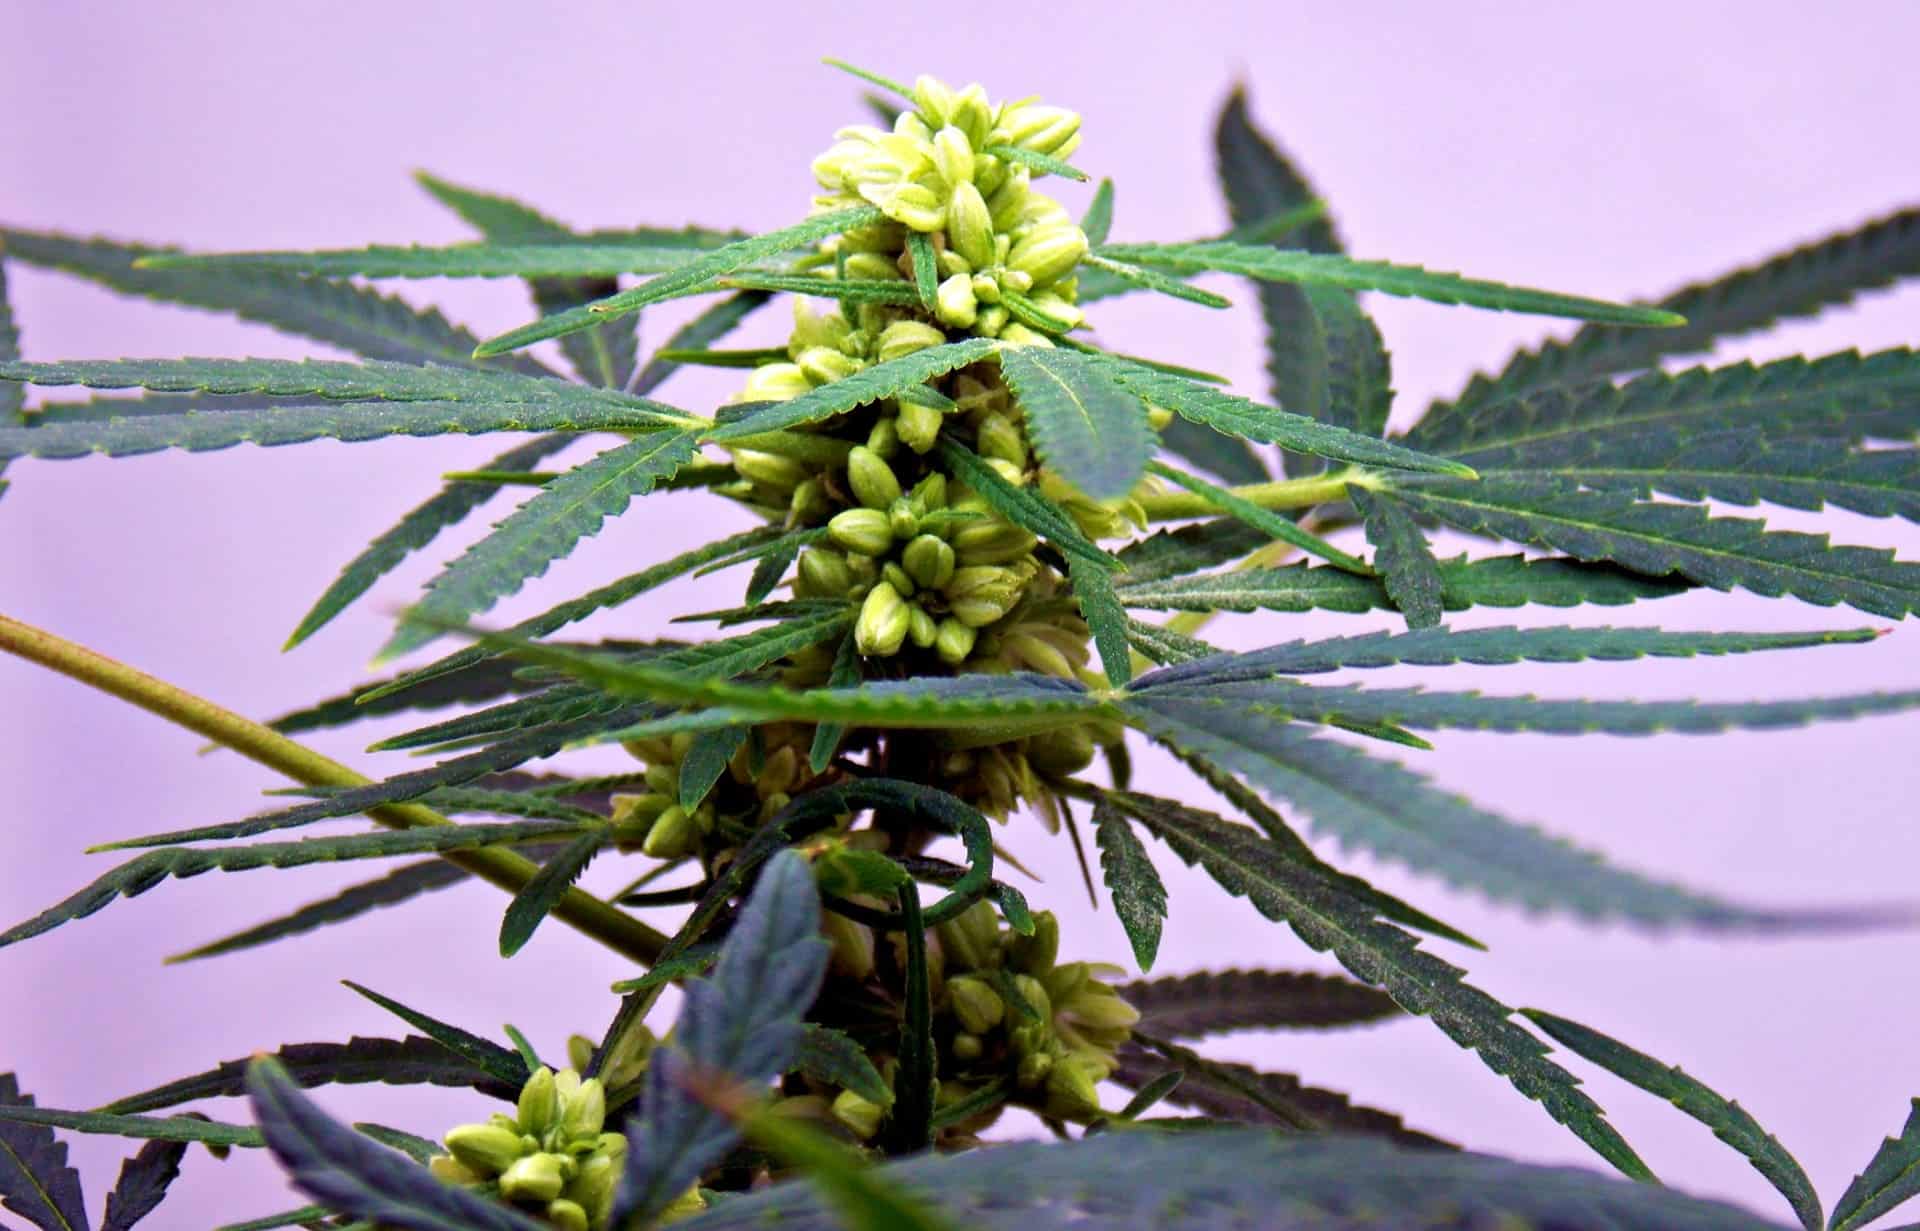 The STS method for breeding feminized Cannabis seeds utilizes a foliar appl...